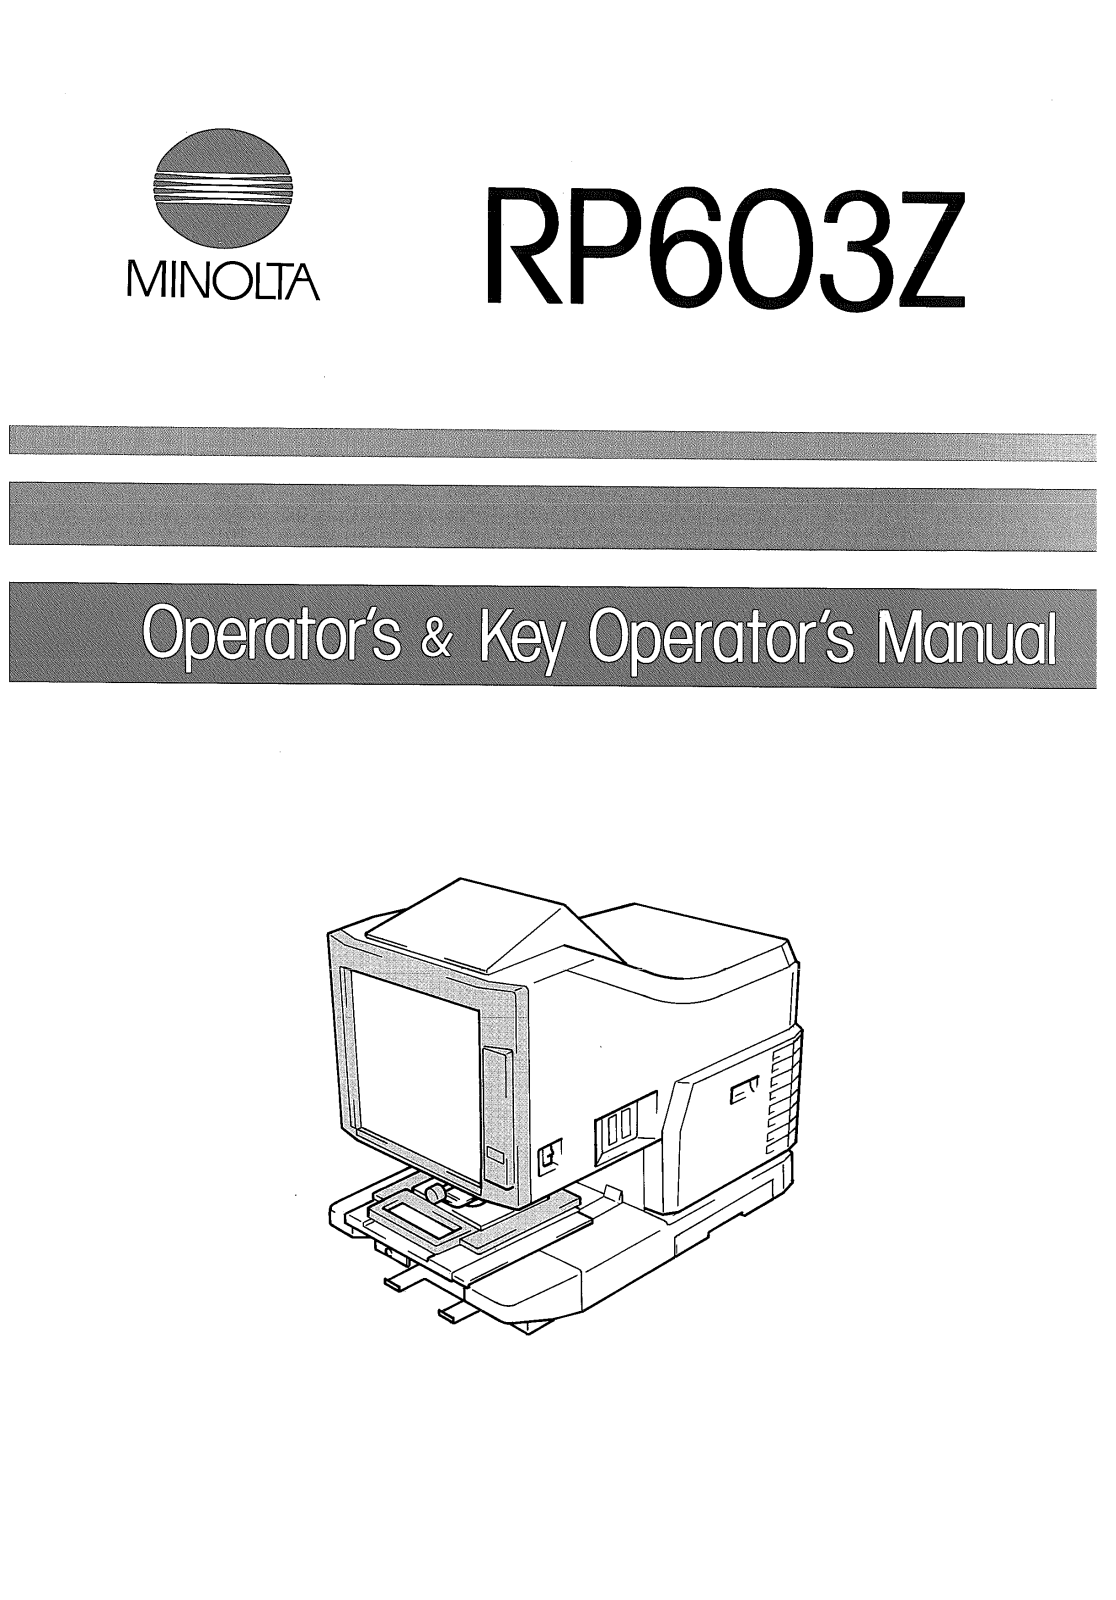 Konica Minolta RP603Z Manual